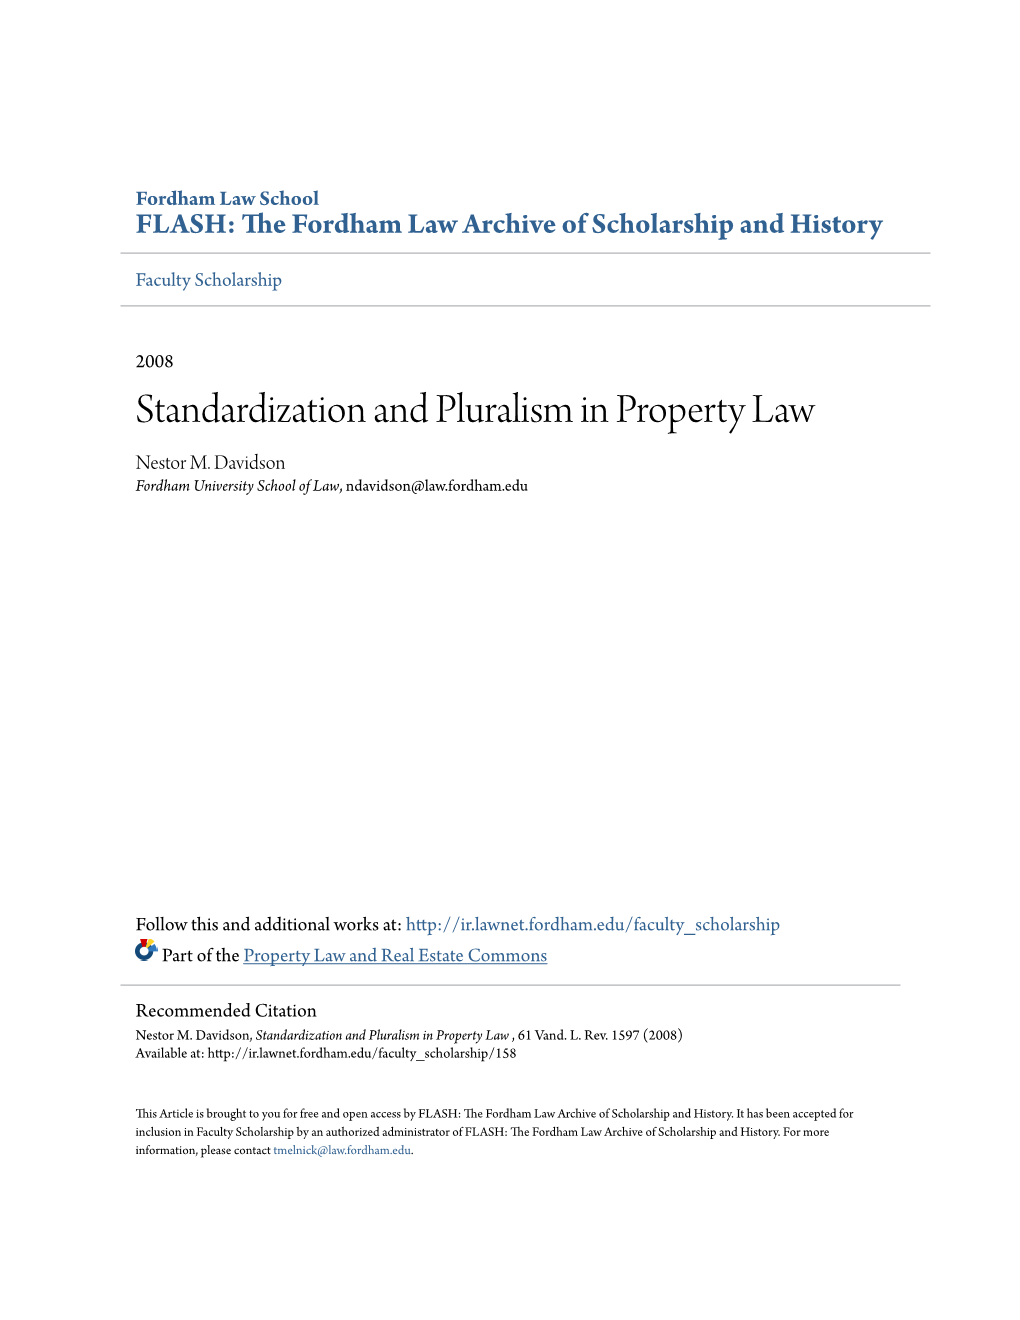 Standardization and Pluralism in Property Law Nestor M